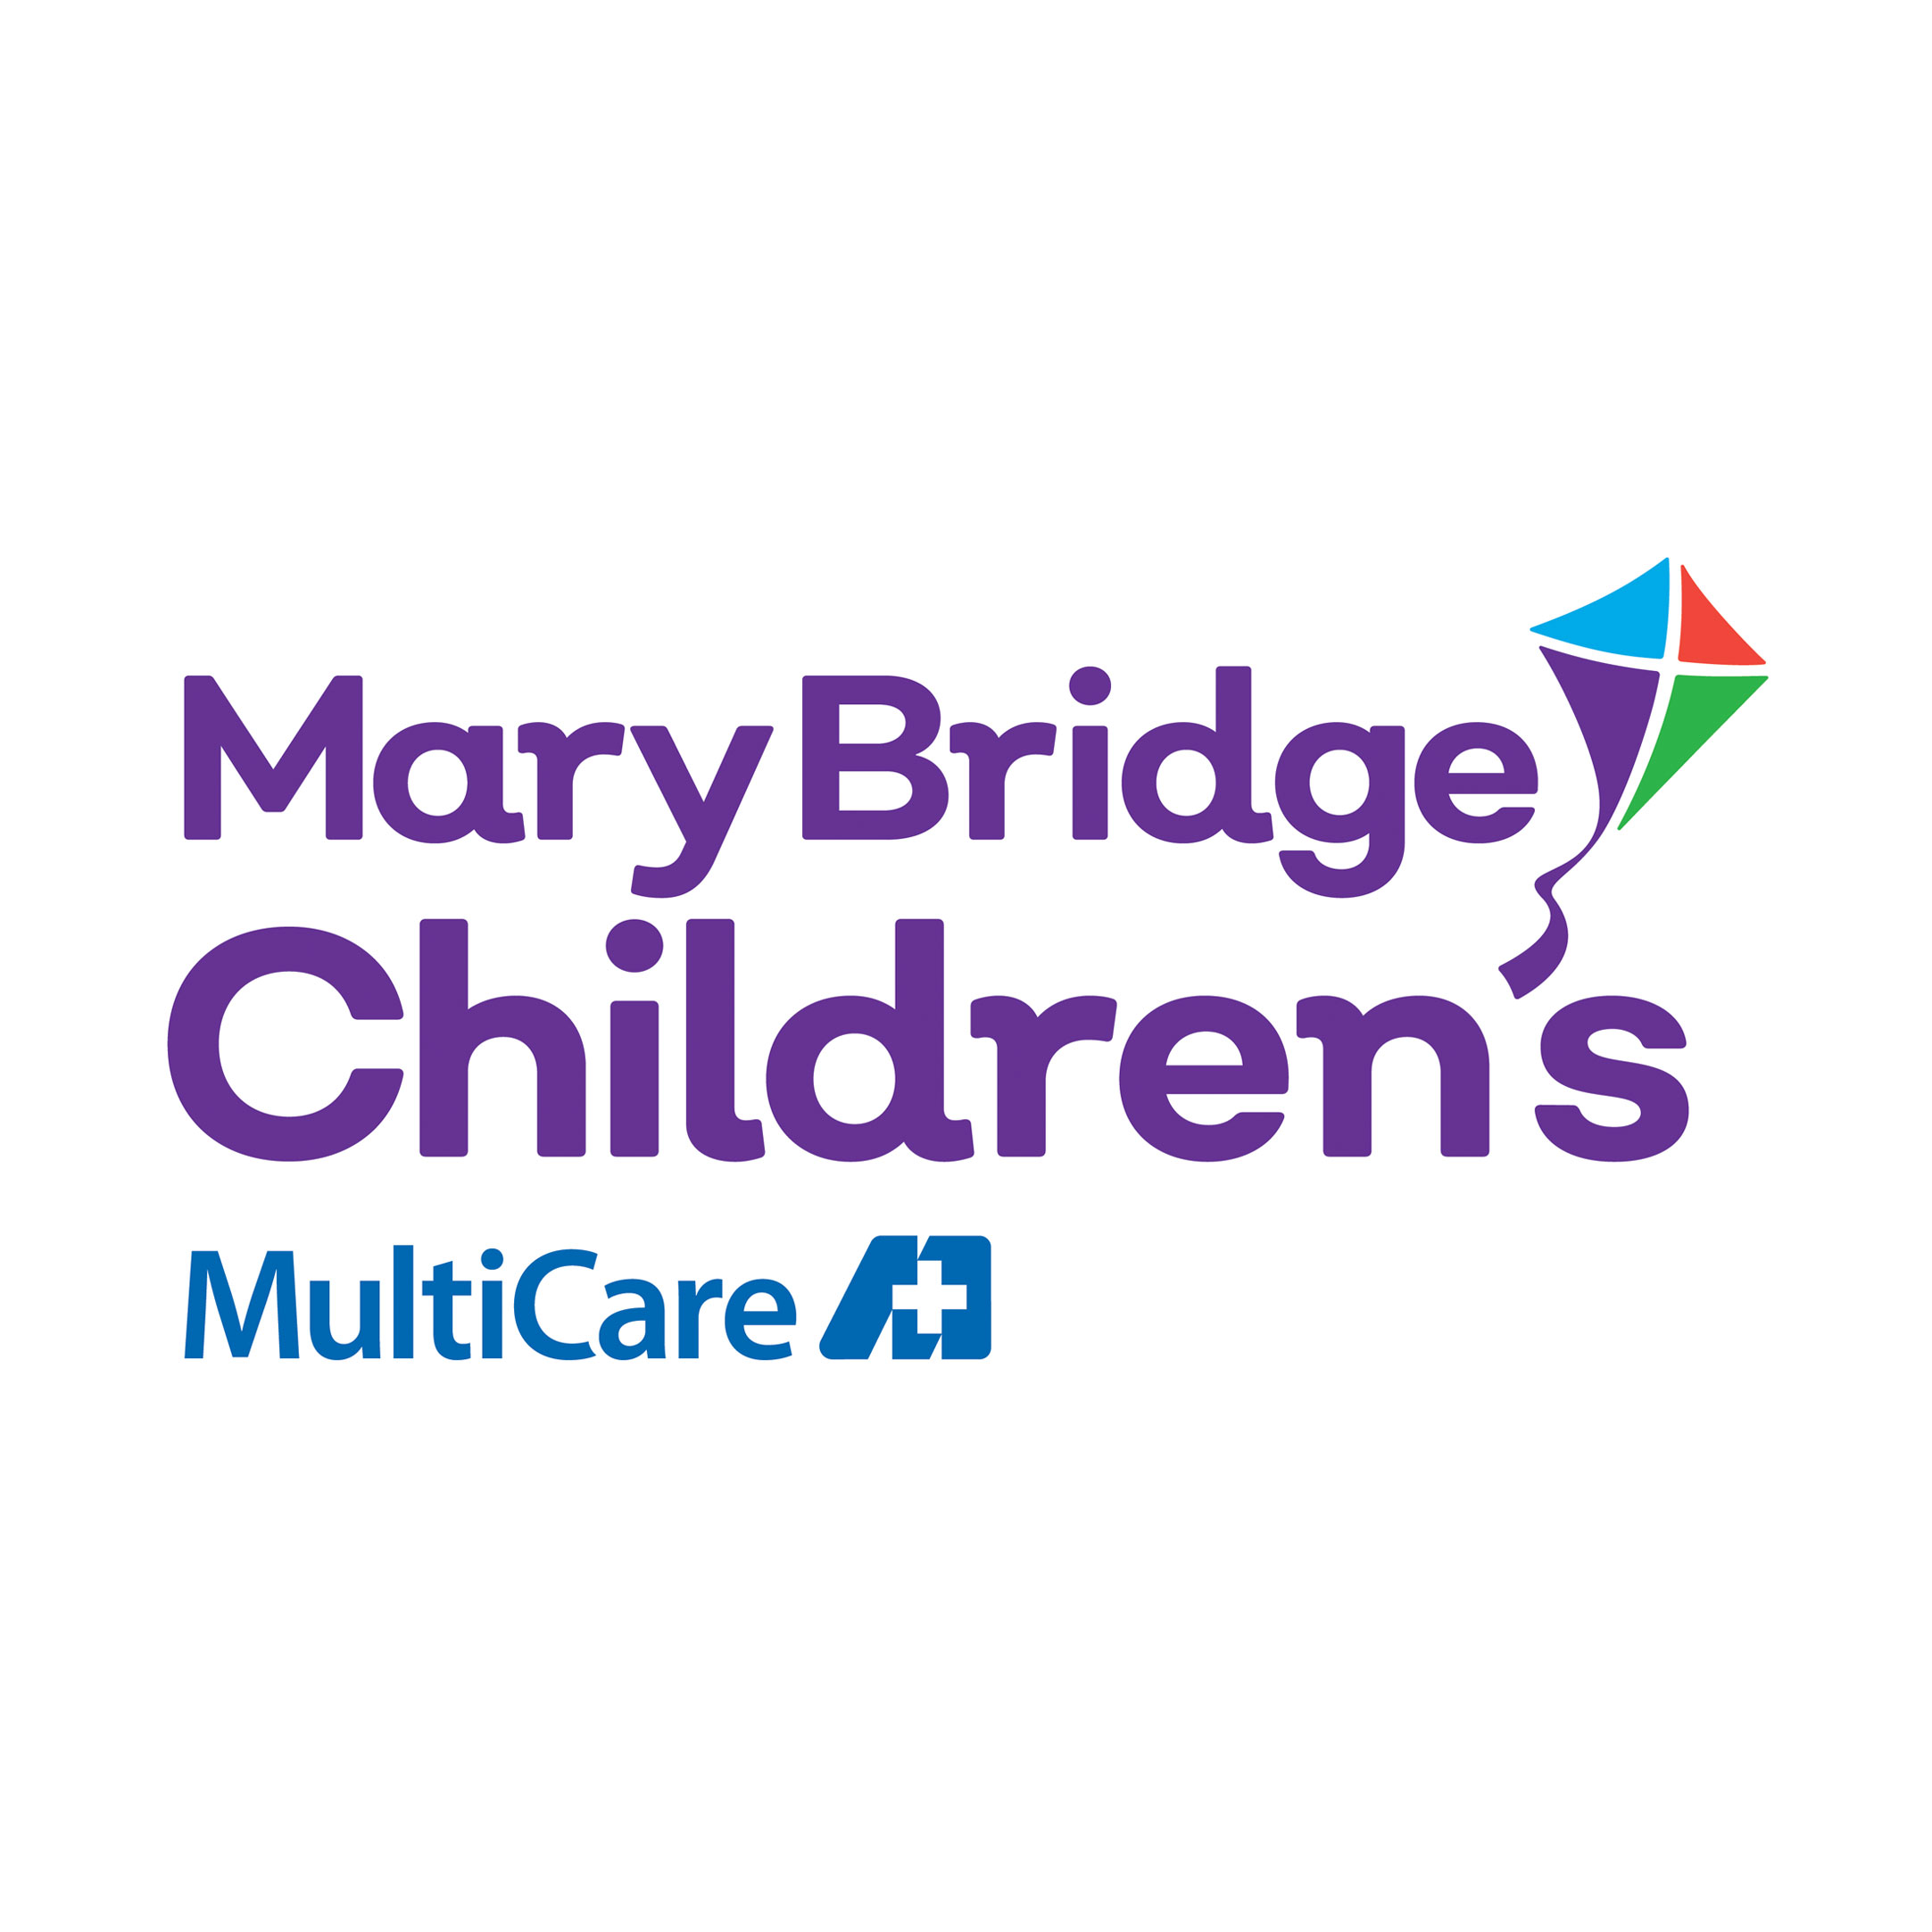 Mary Bridge Childrens Hospital: Emergency Department | 317 Martin Luther King Jr Way, Tacoma, WA, 98405 | +1 (253) 403-1418